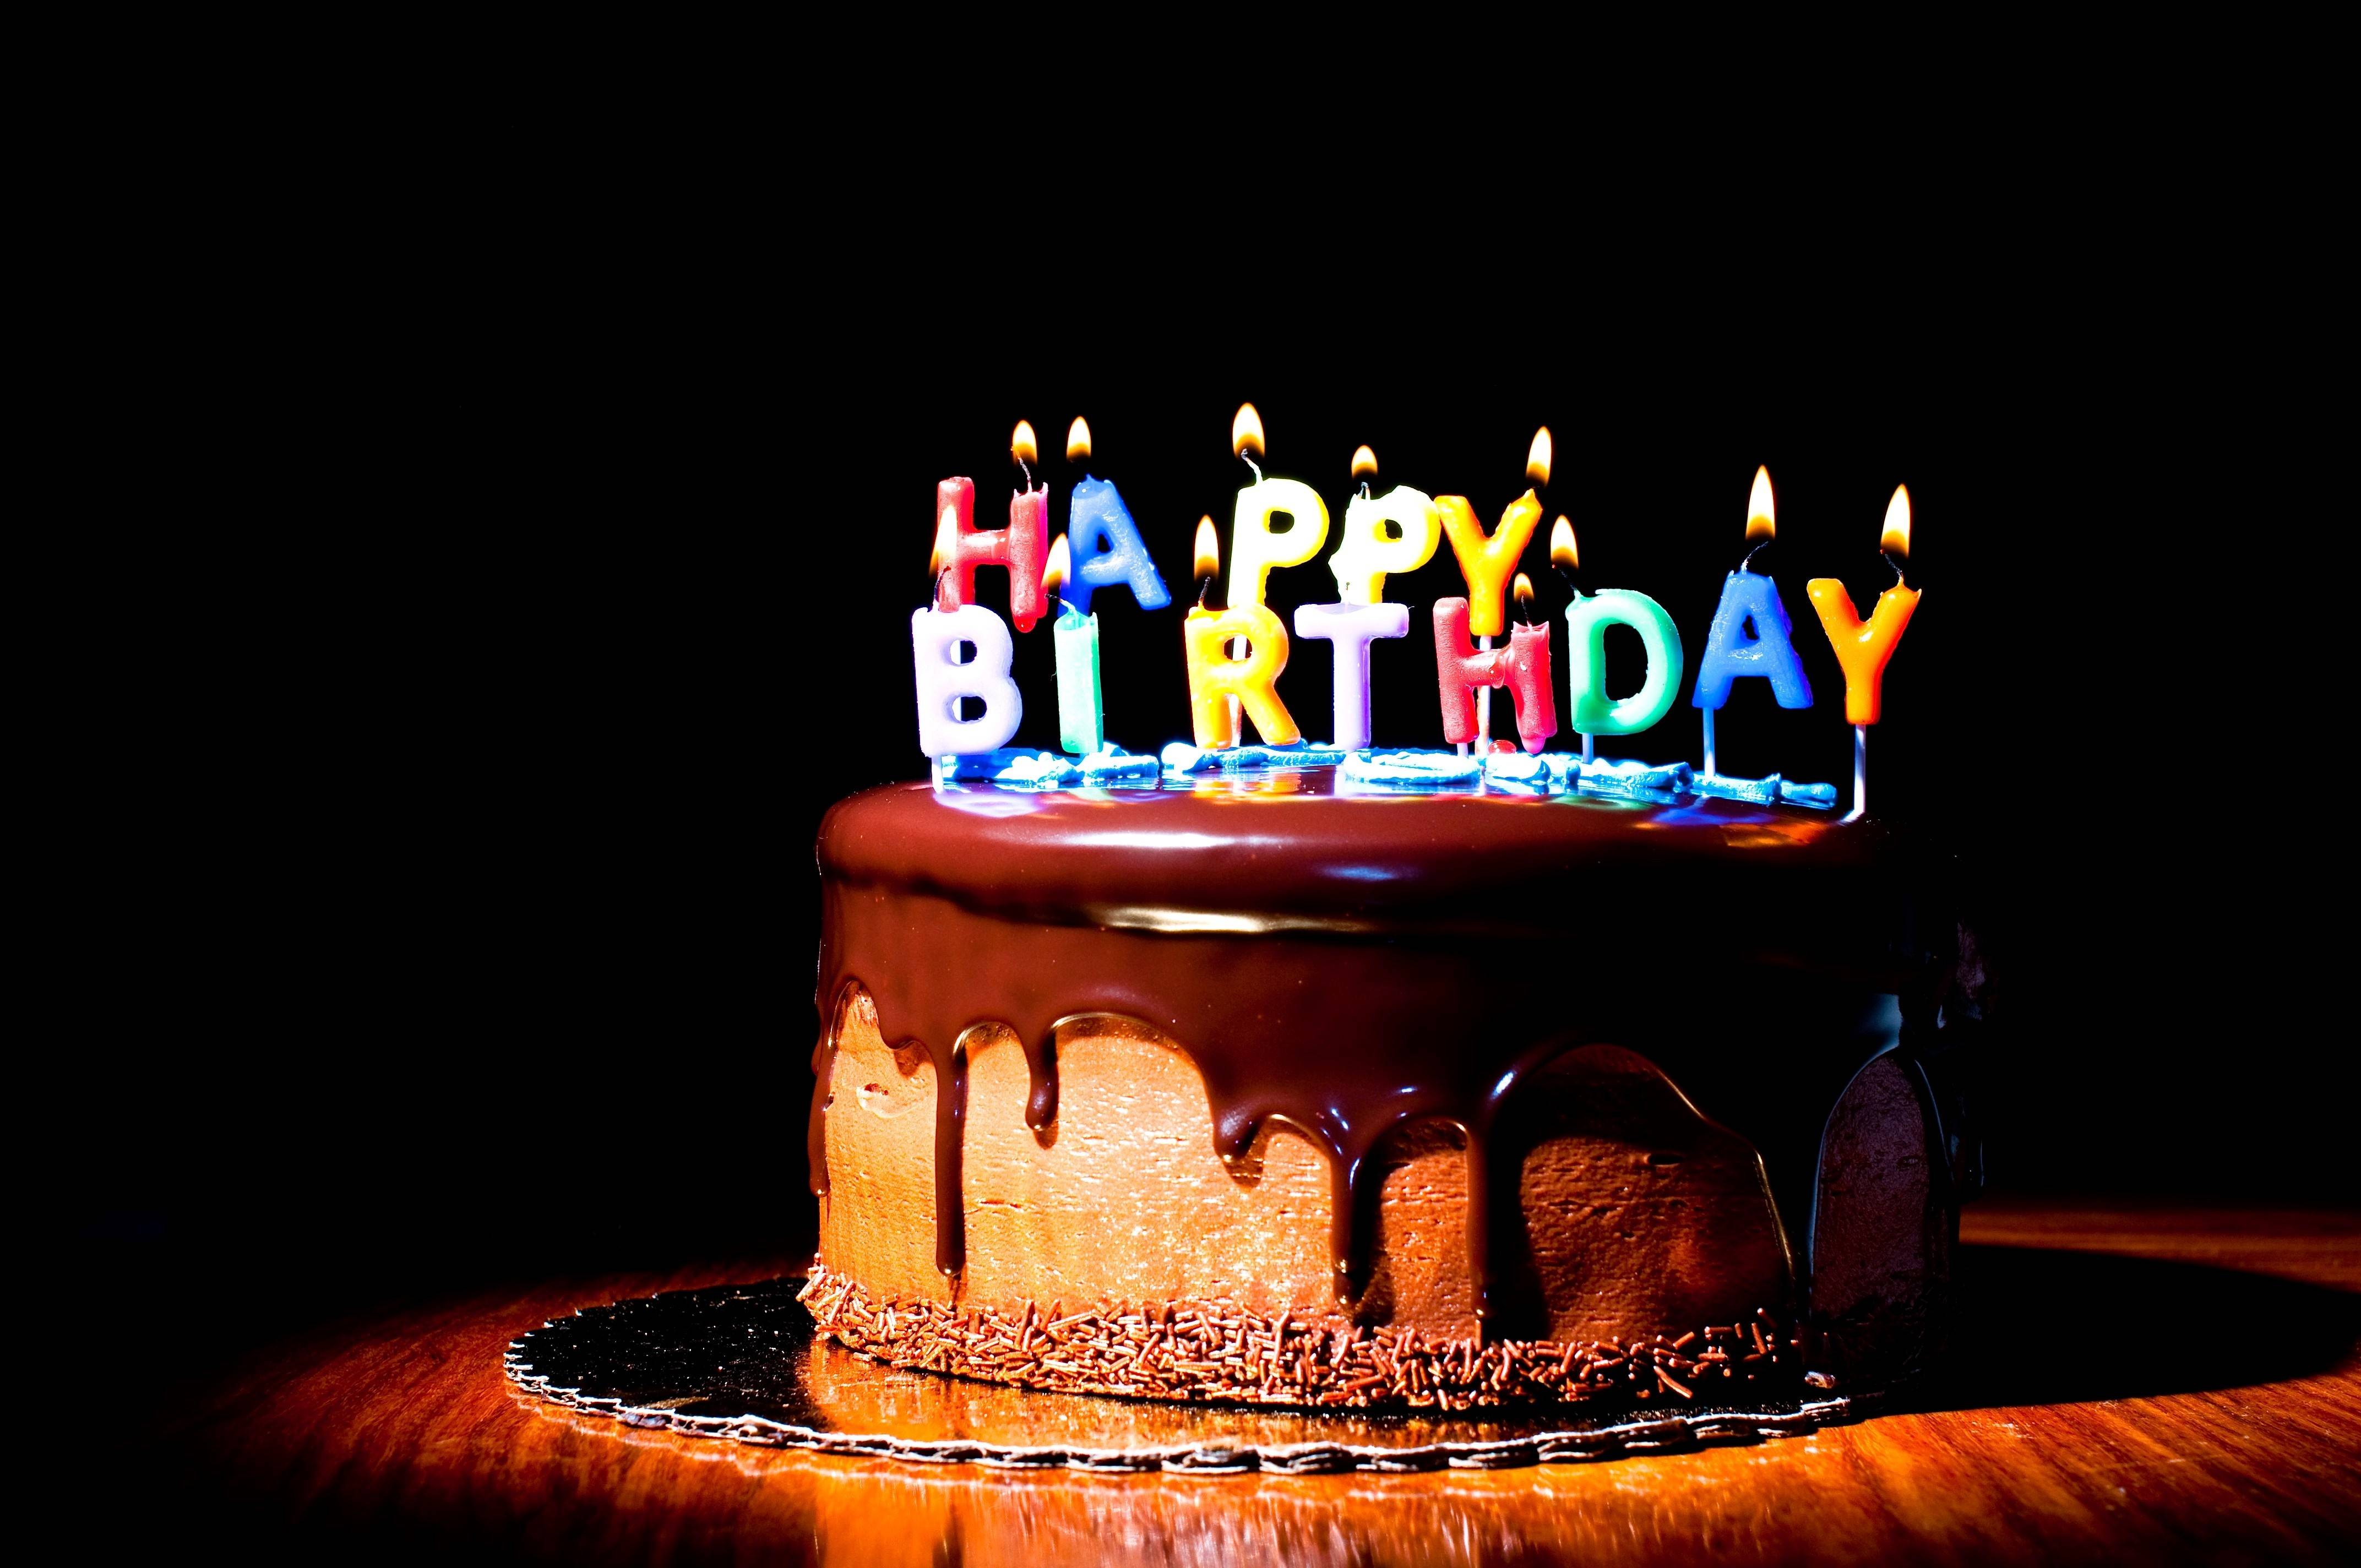 Birthday Wallpaper. Free Download HD Cake Celebration Party Image